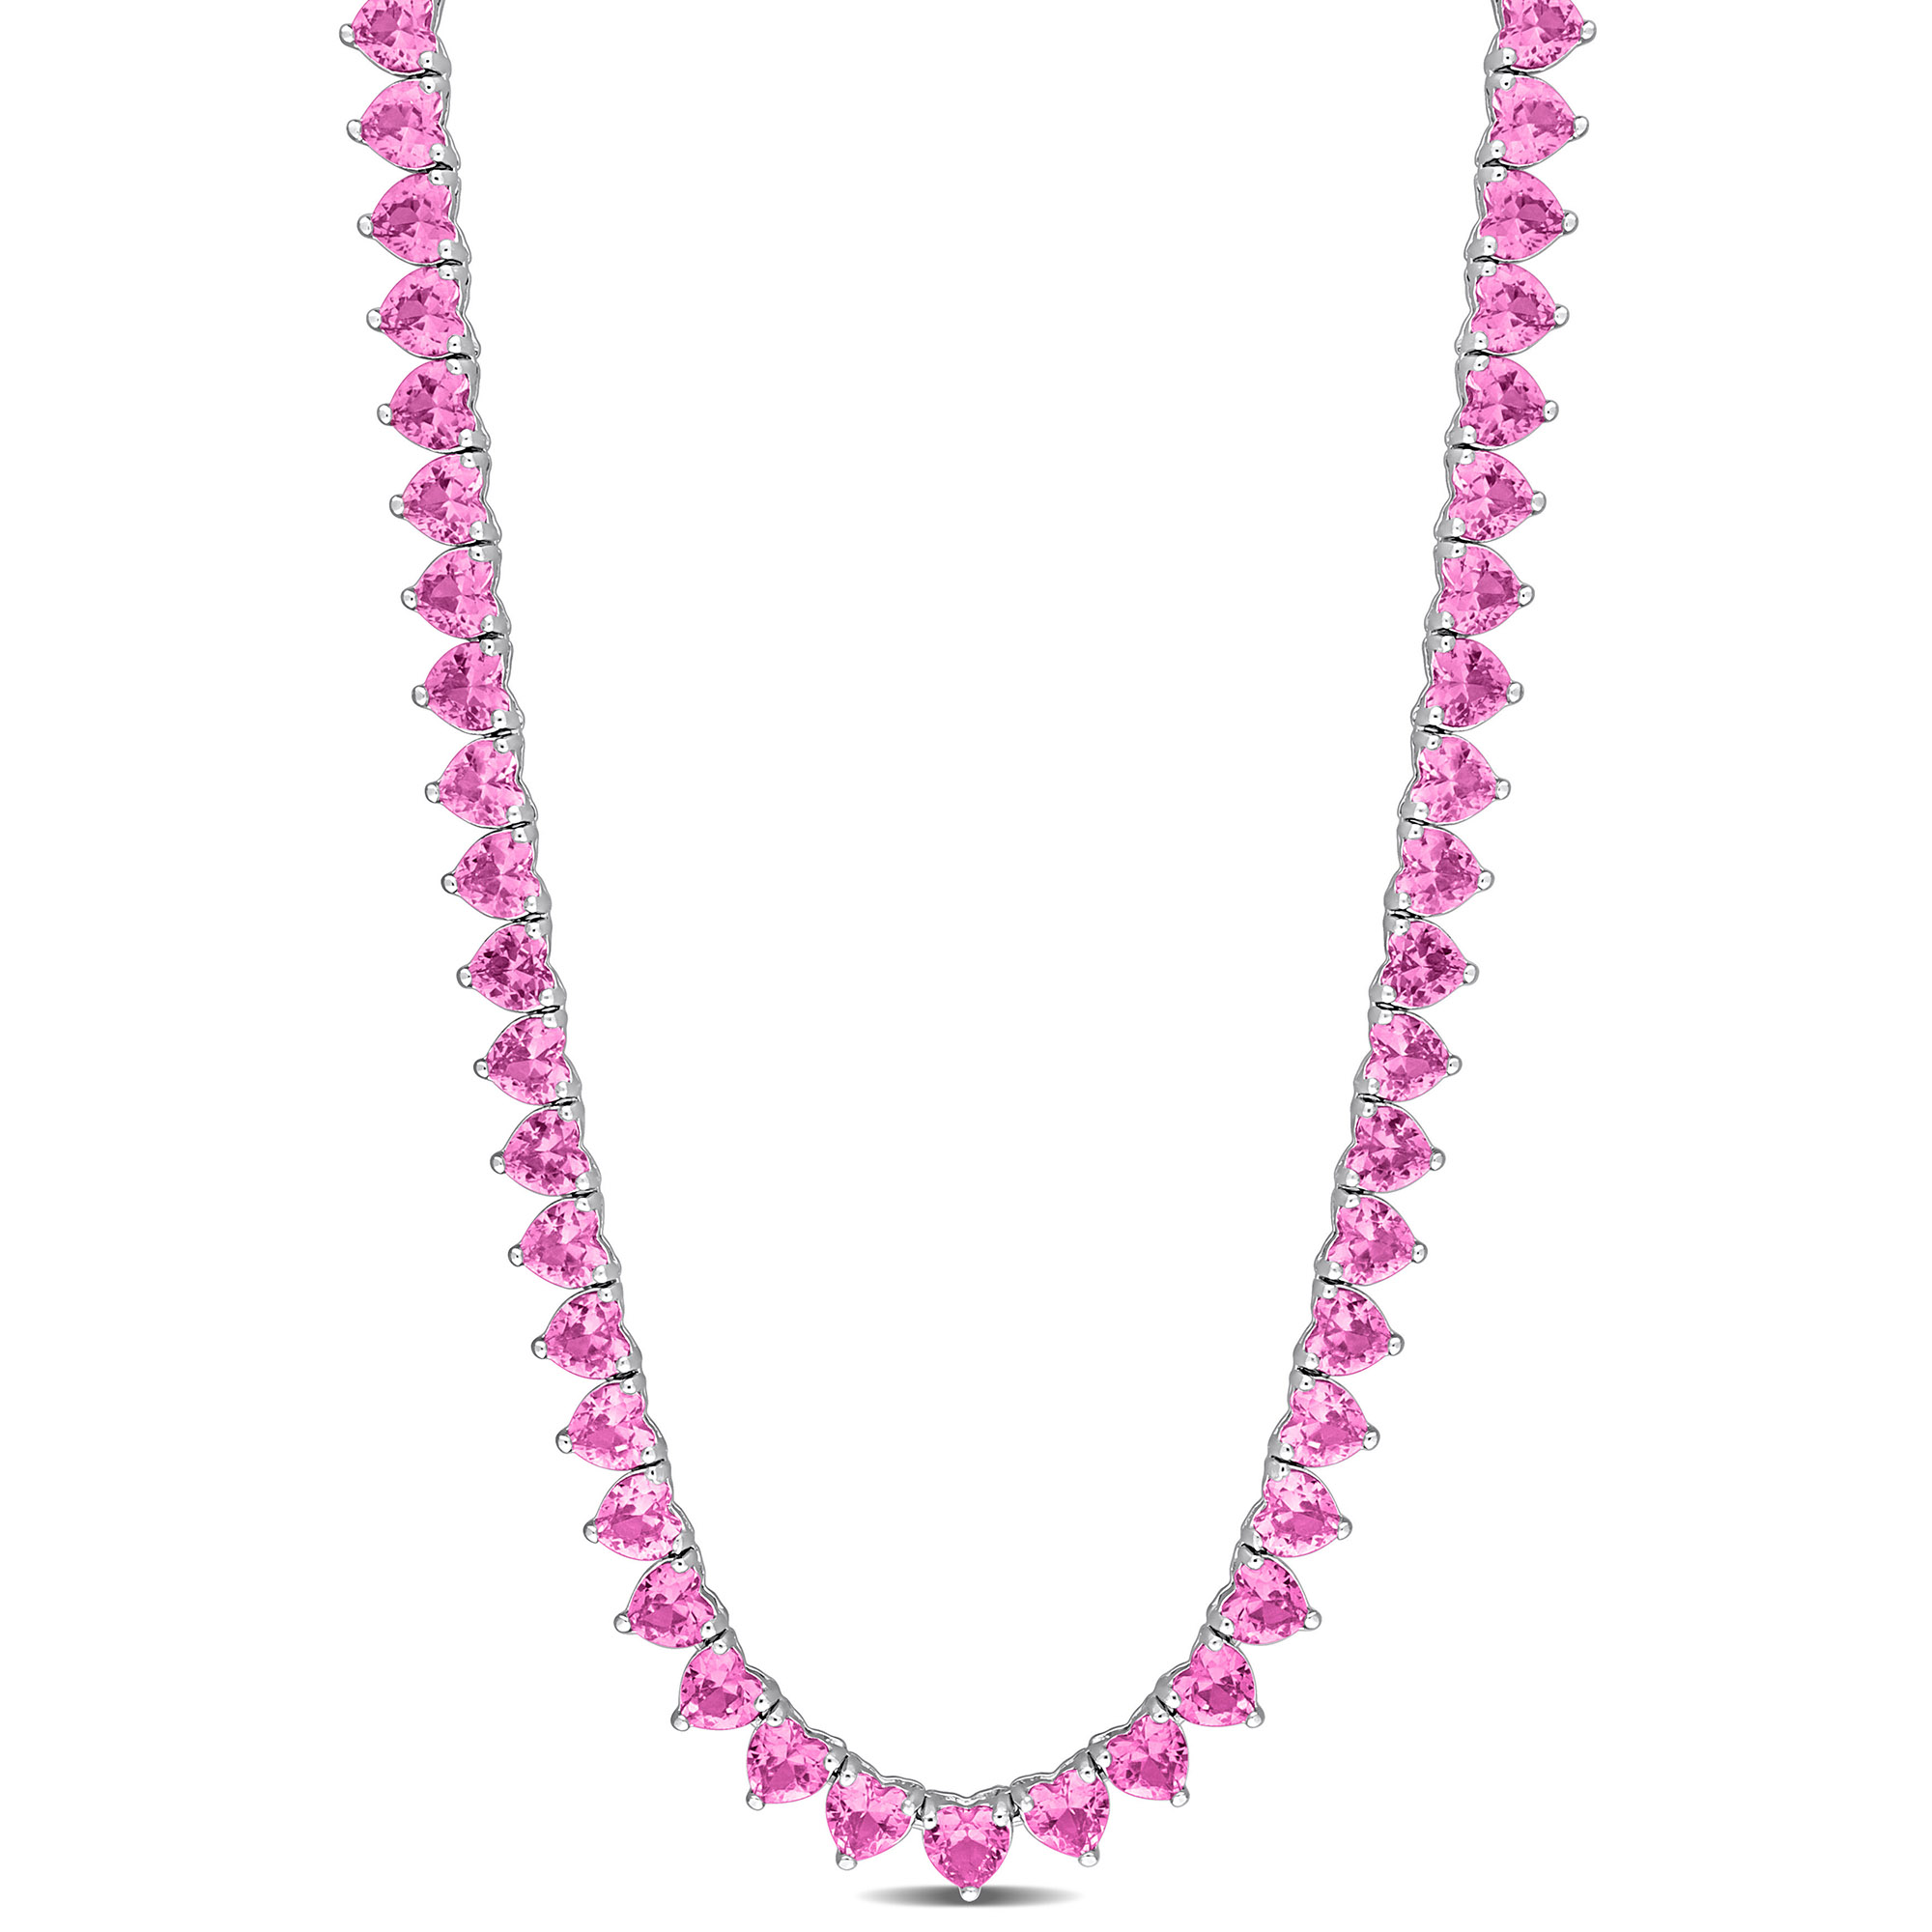 Diamond Luxe Choker with Pink Sapphire Heart Center 15 / Yellow Gold